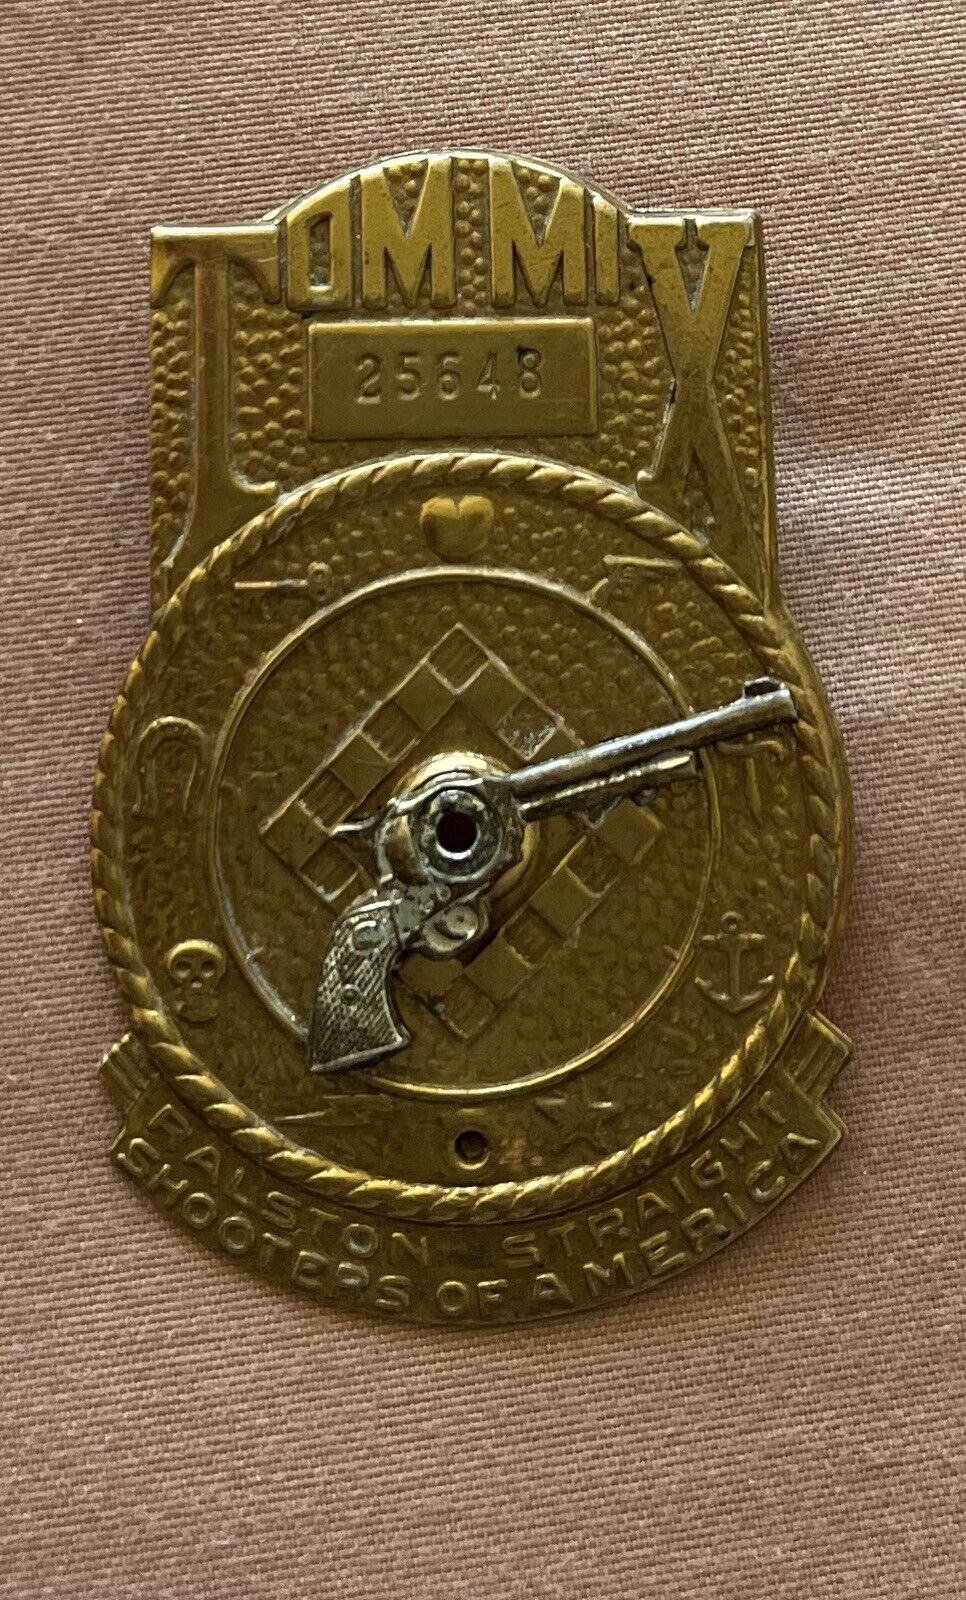 1941 TOM MIX STRAIGHT SHOOTER SIX-GUN DECODER Badge Pin Ralston Radio Premium